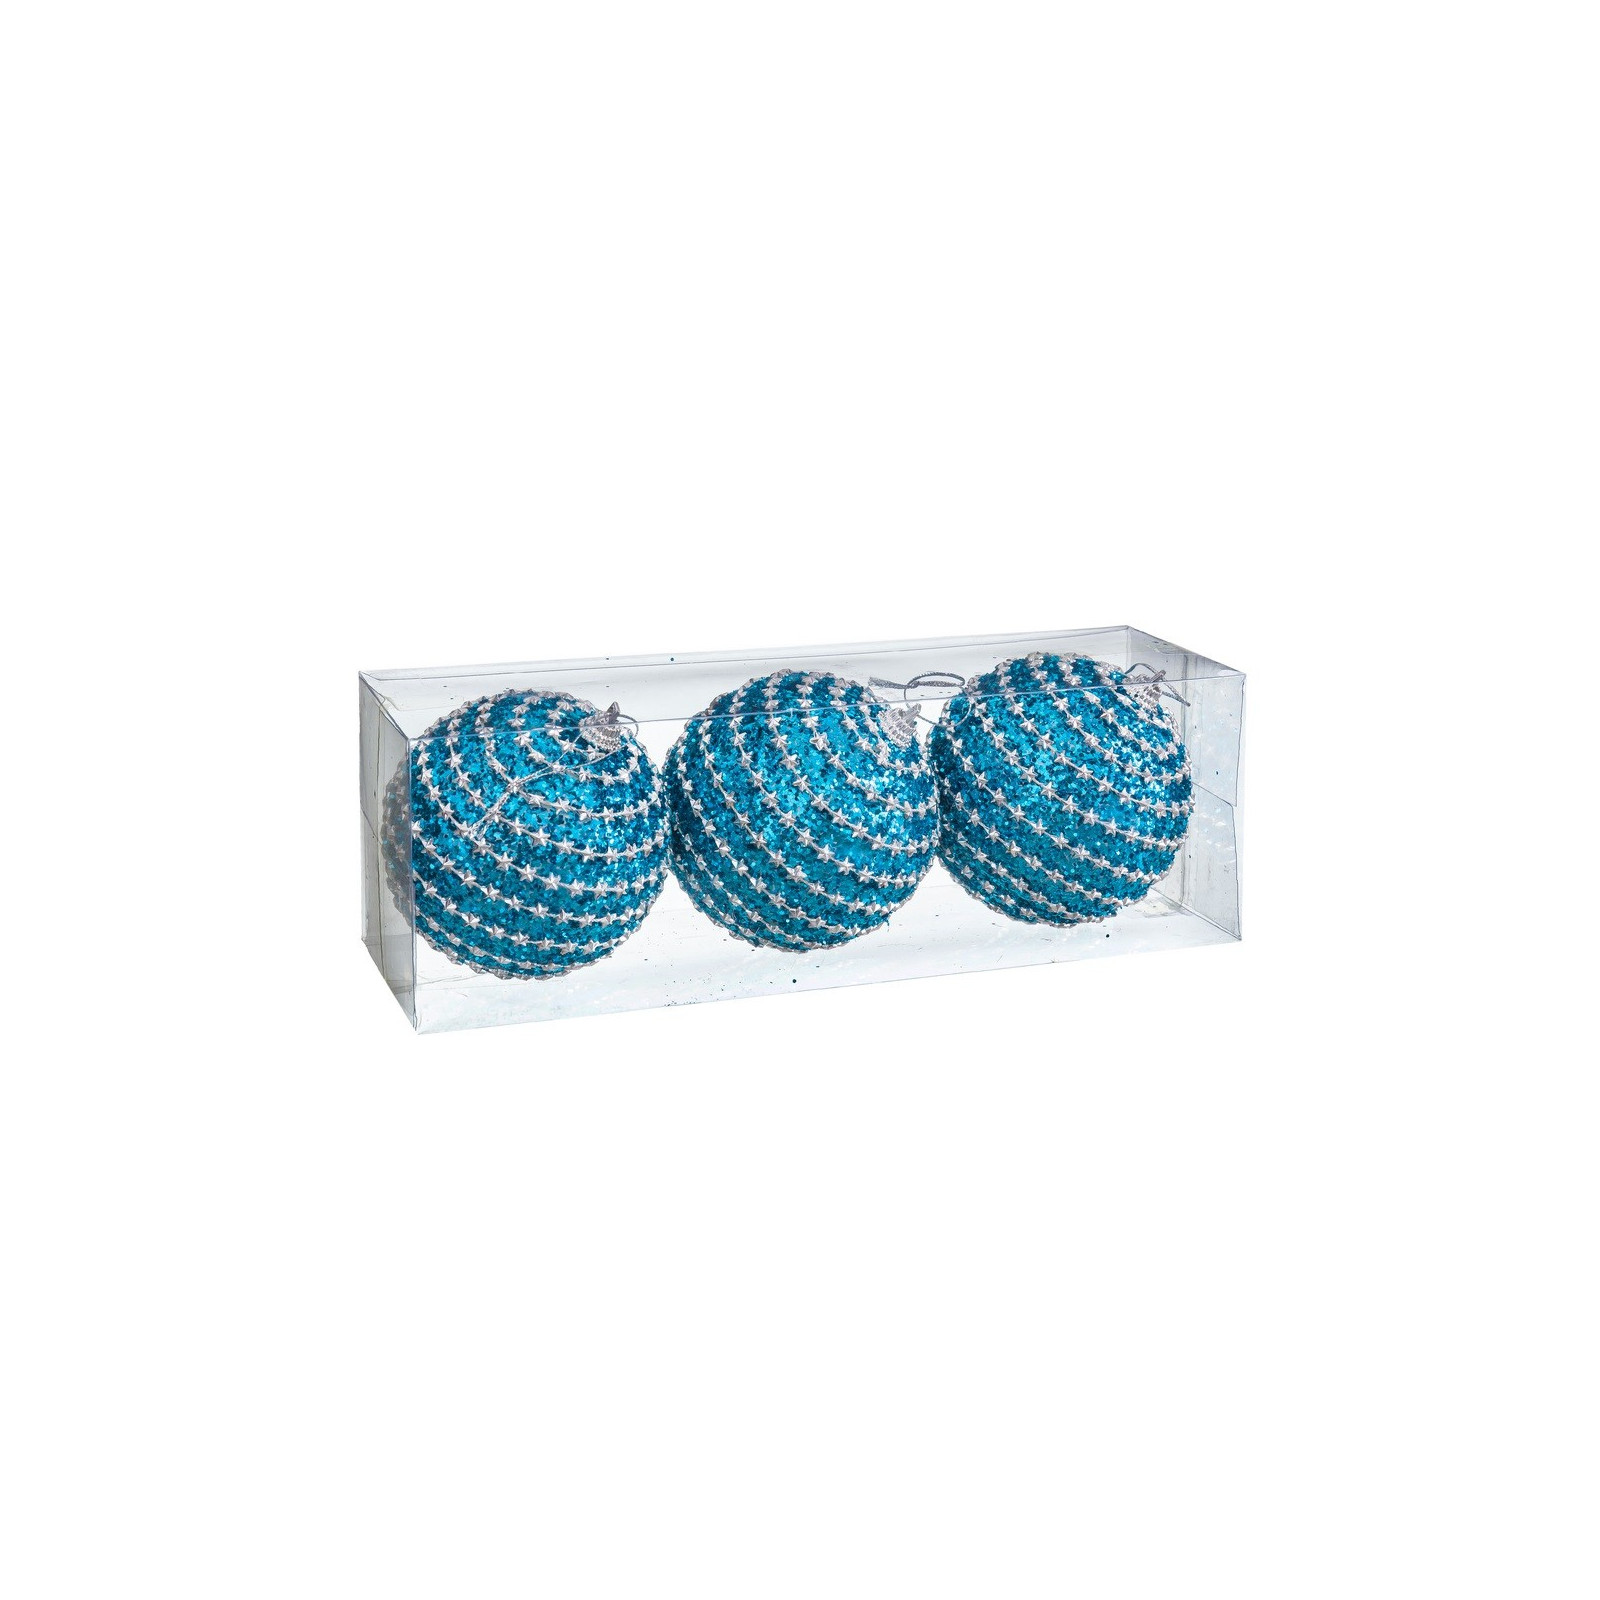 S 3 bolas polyfoam turquesa 8 x 8 x 8 cm